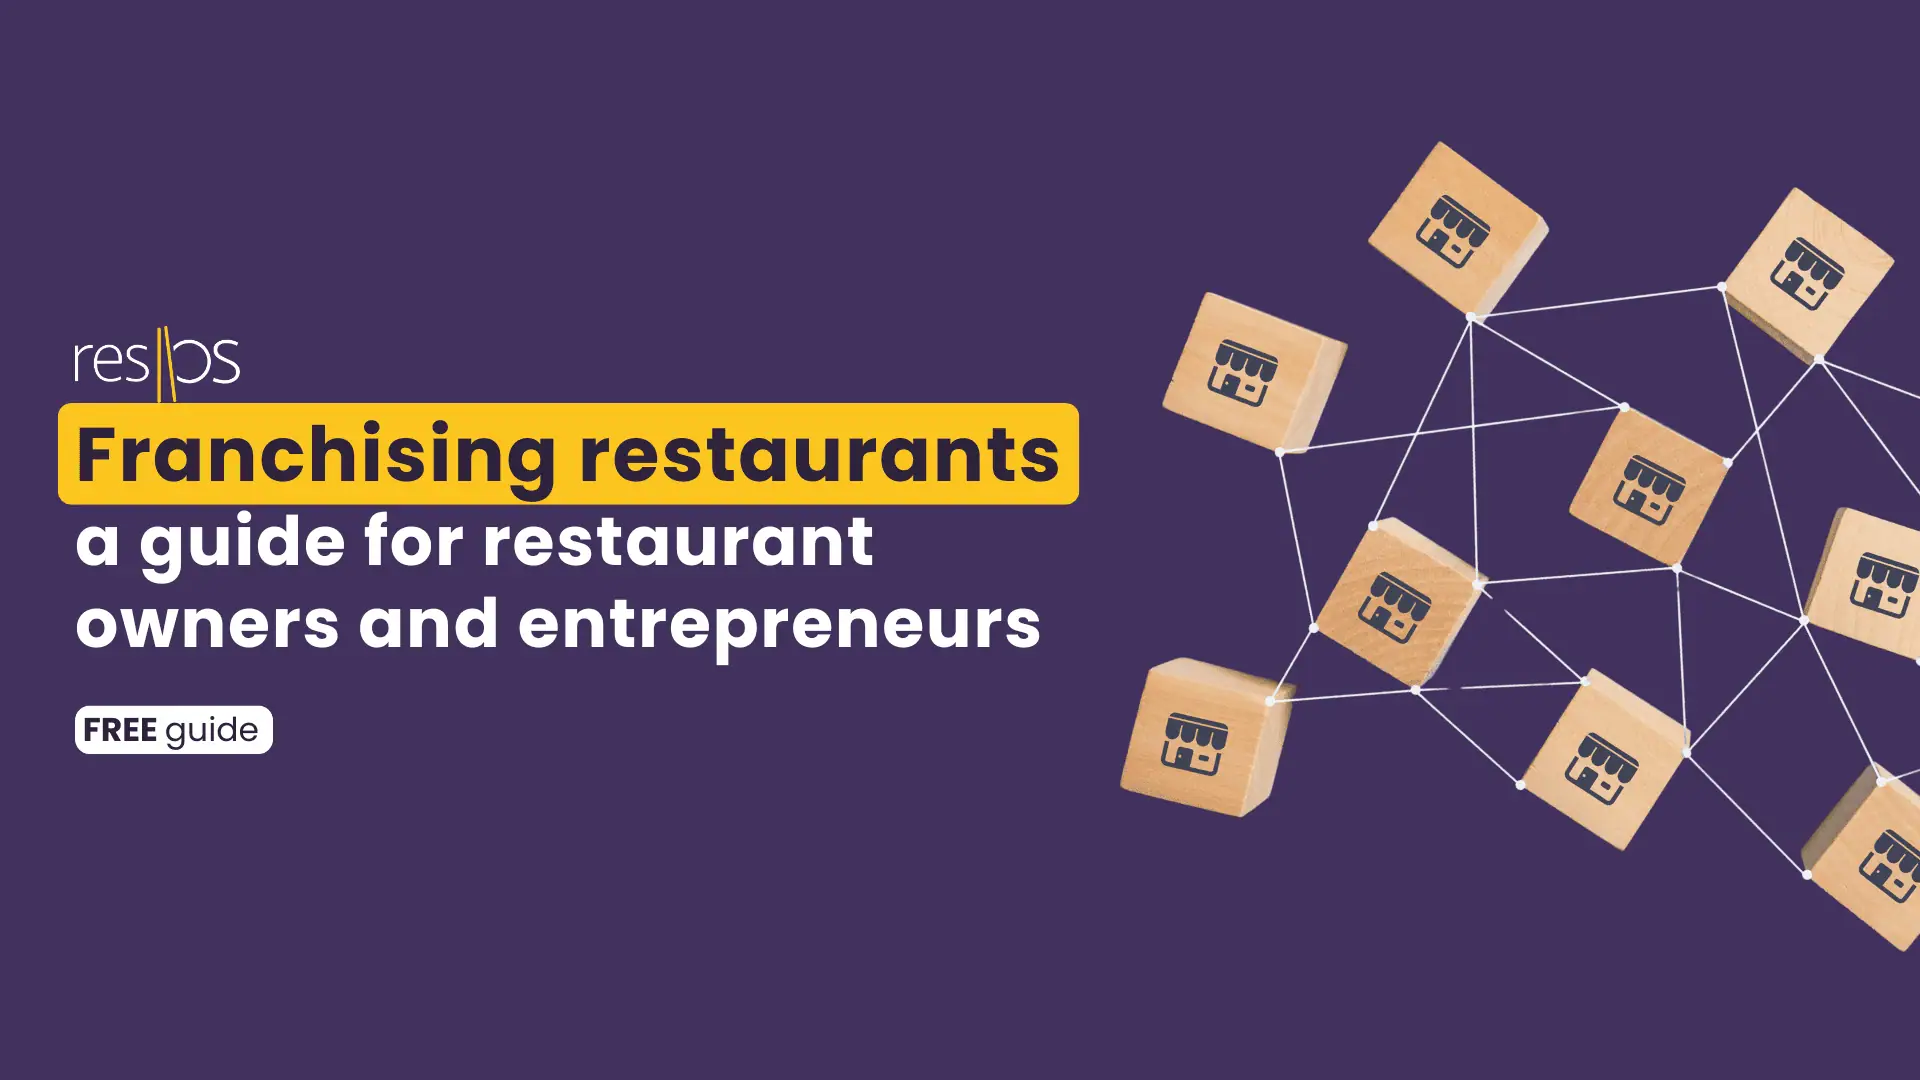 Franchising restaurants — a guide for restaurant owners and entrepreneurs